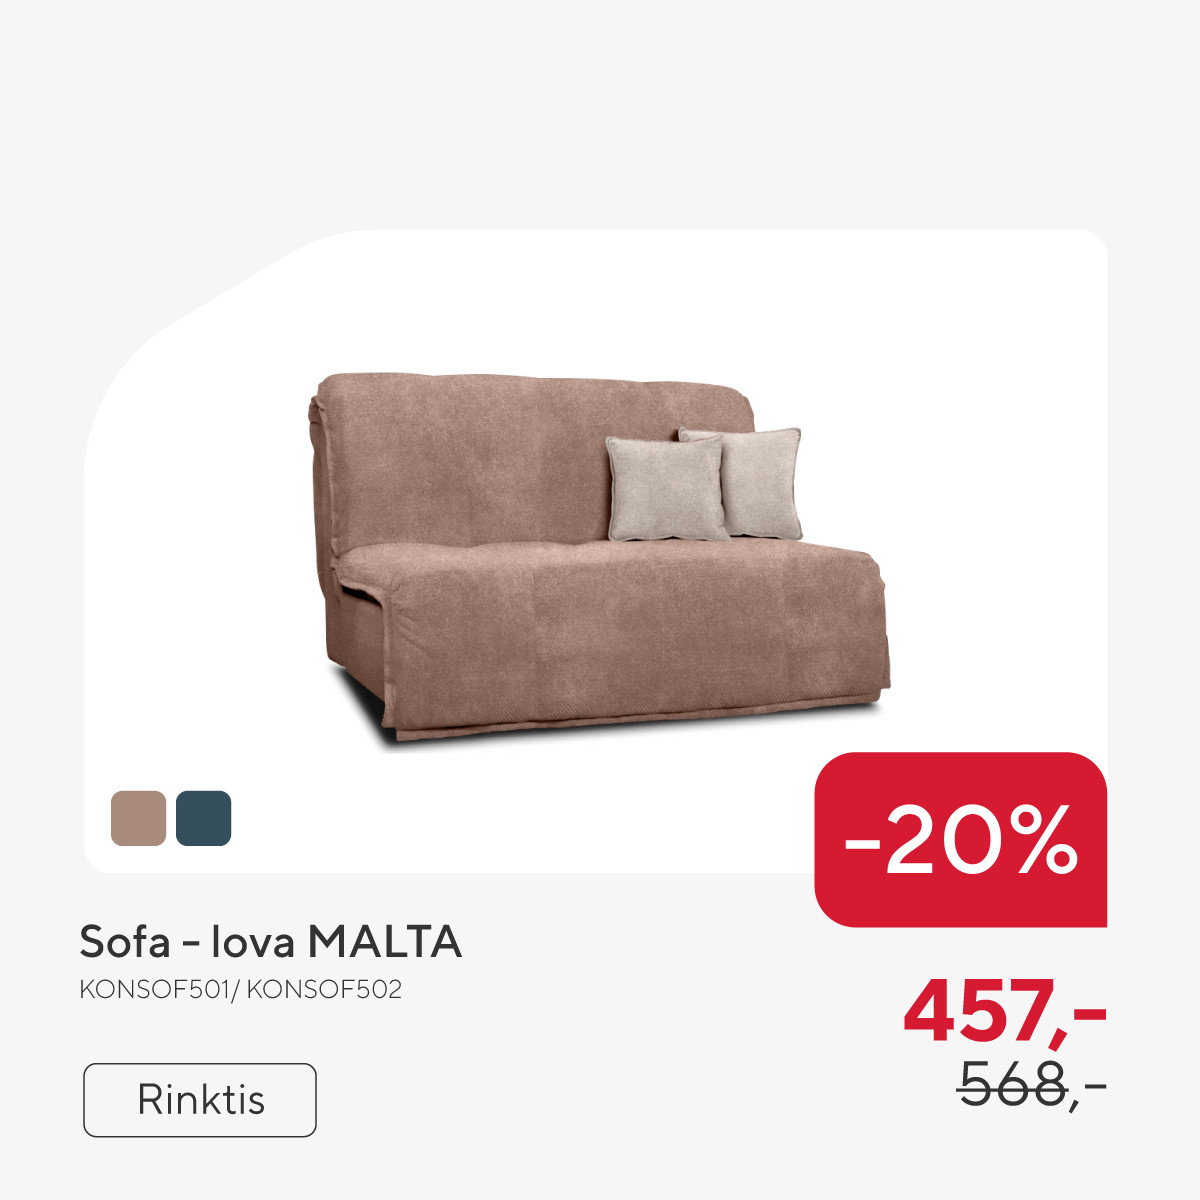 Sofa - lova MALTA